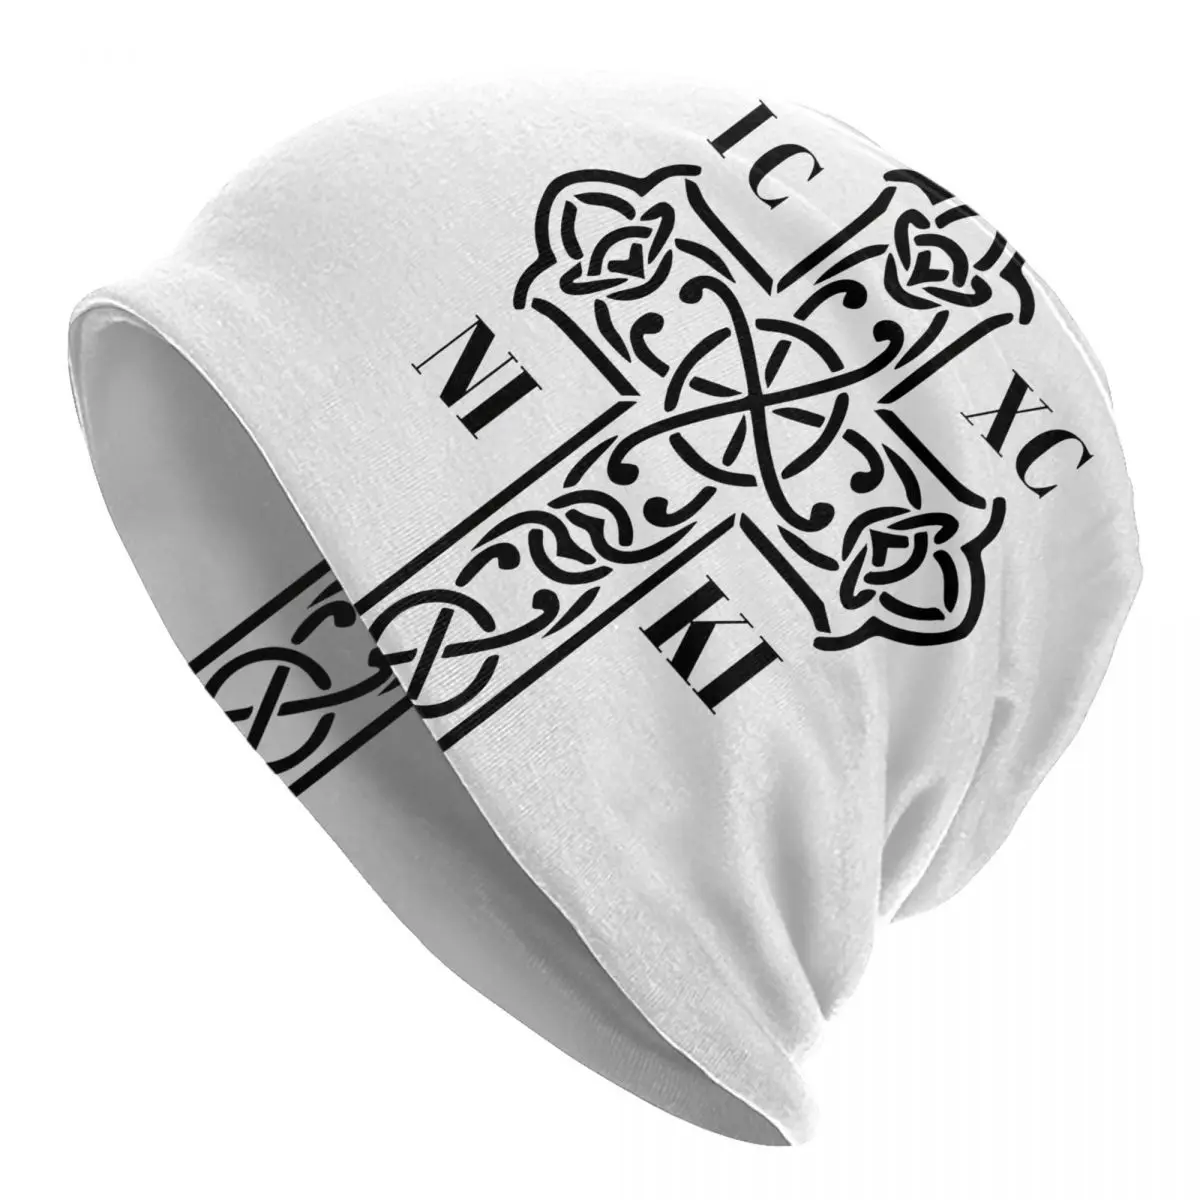 Ic Xc Nika Adult Men's Women's Knit Hat Keep warm winter knitted hat